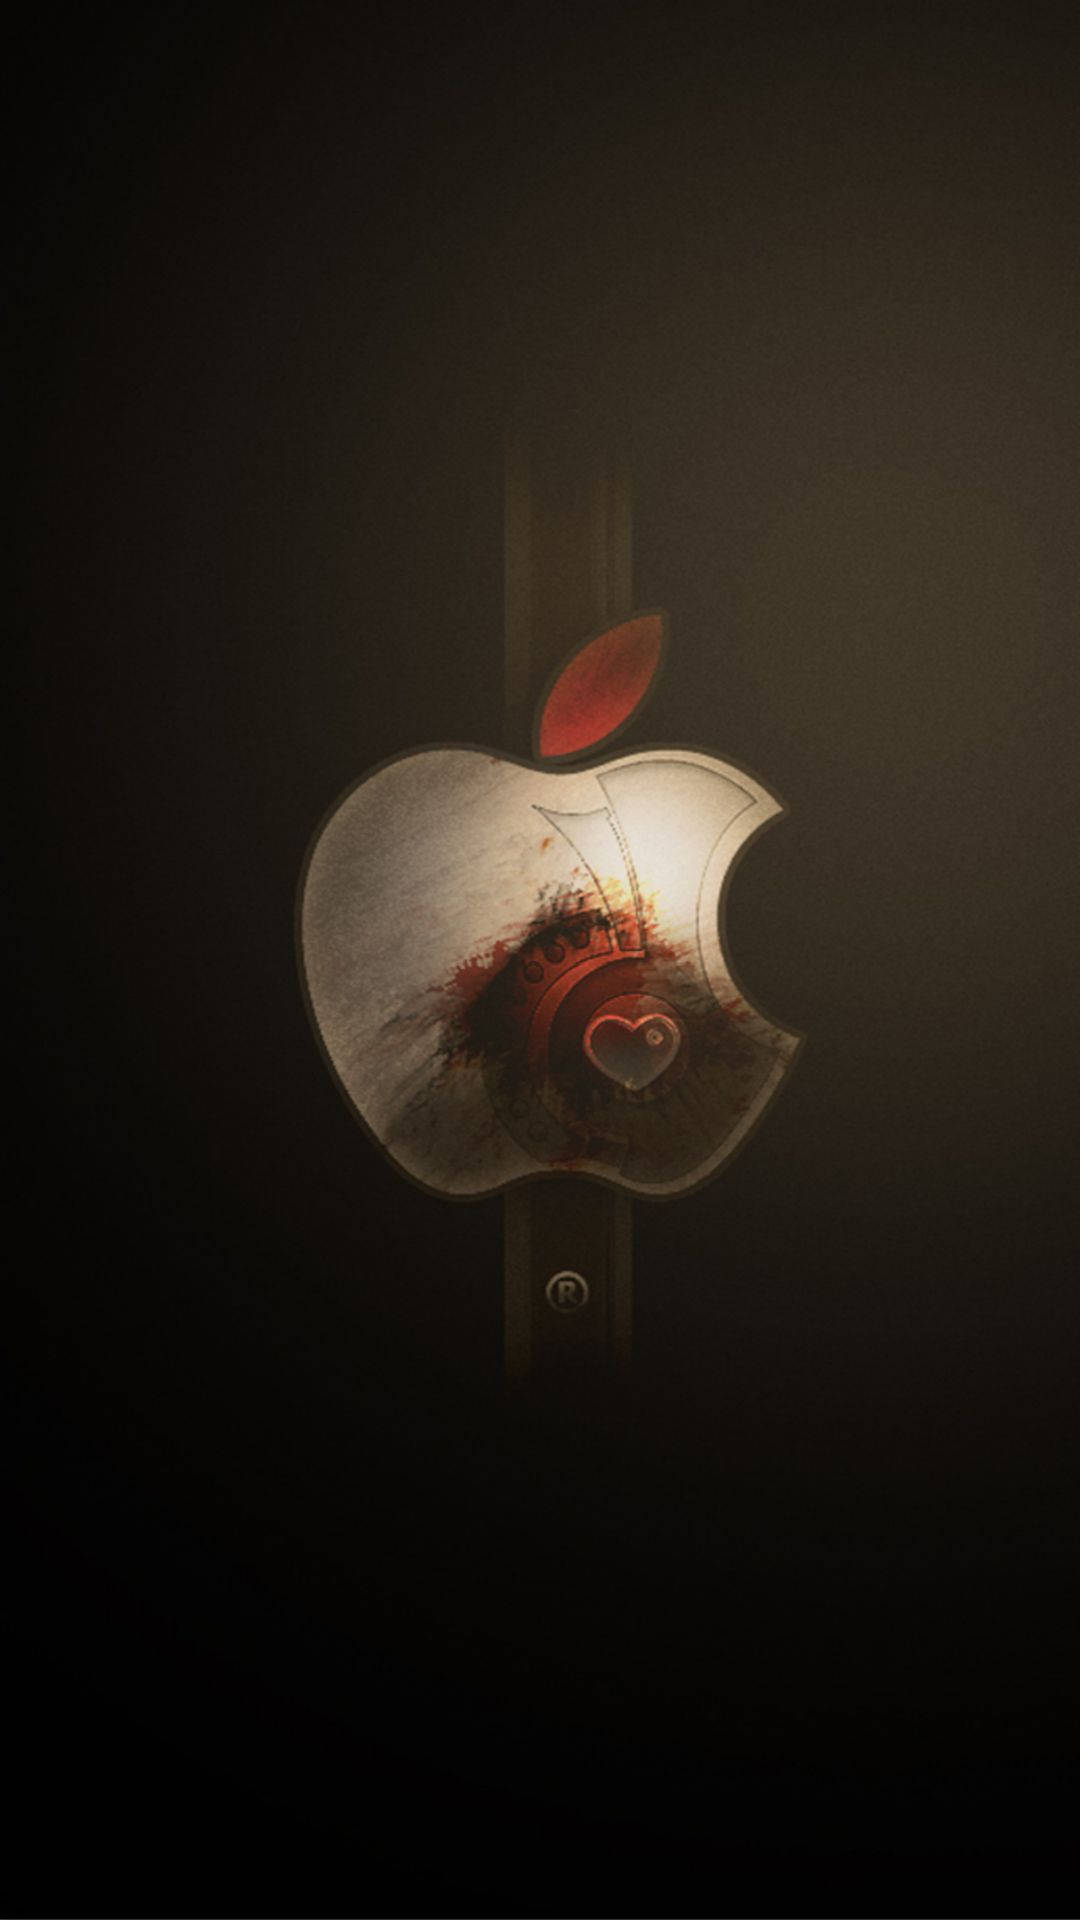 Metallic Apple Logo Iphone Background